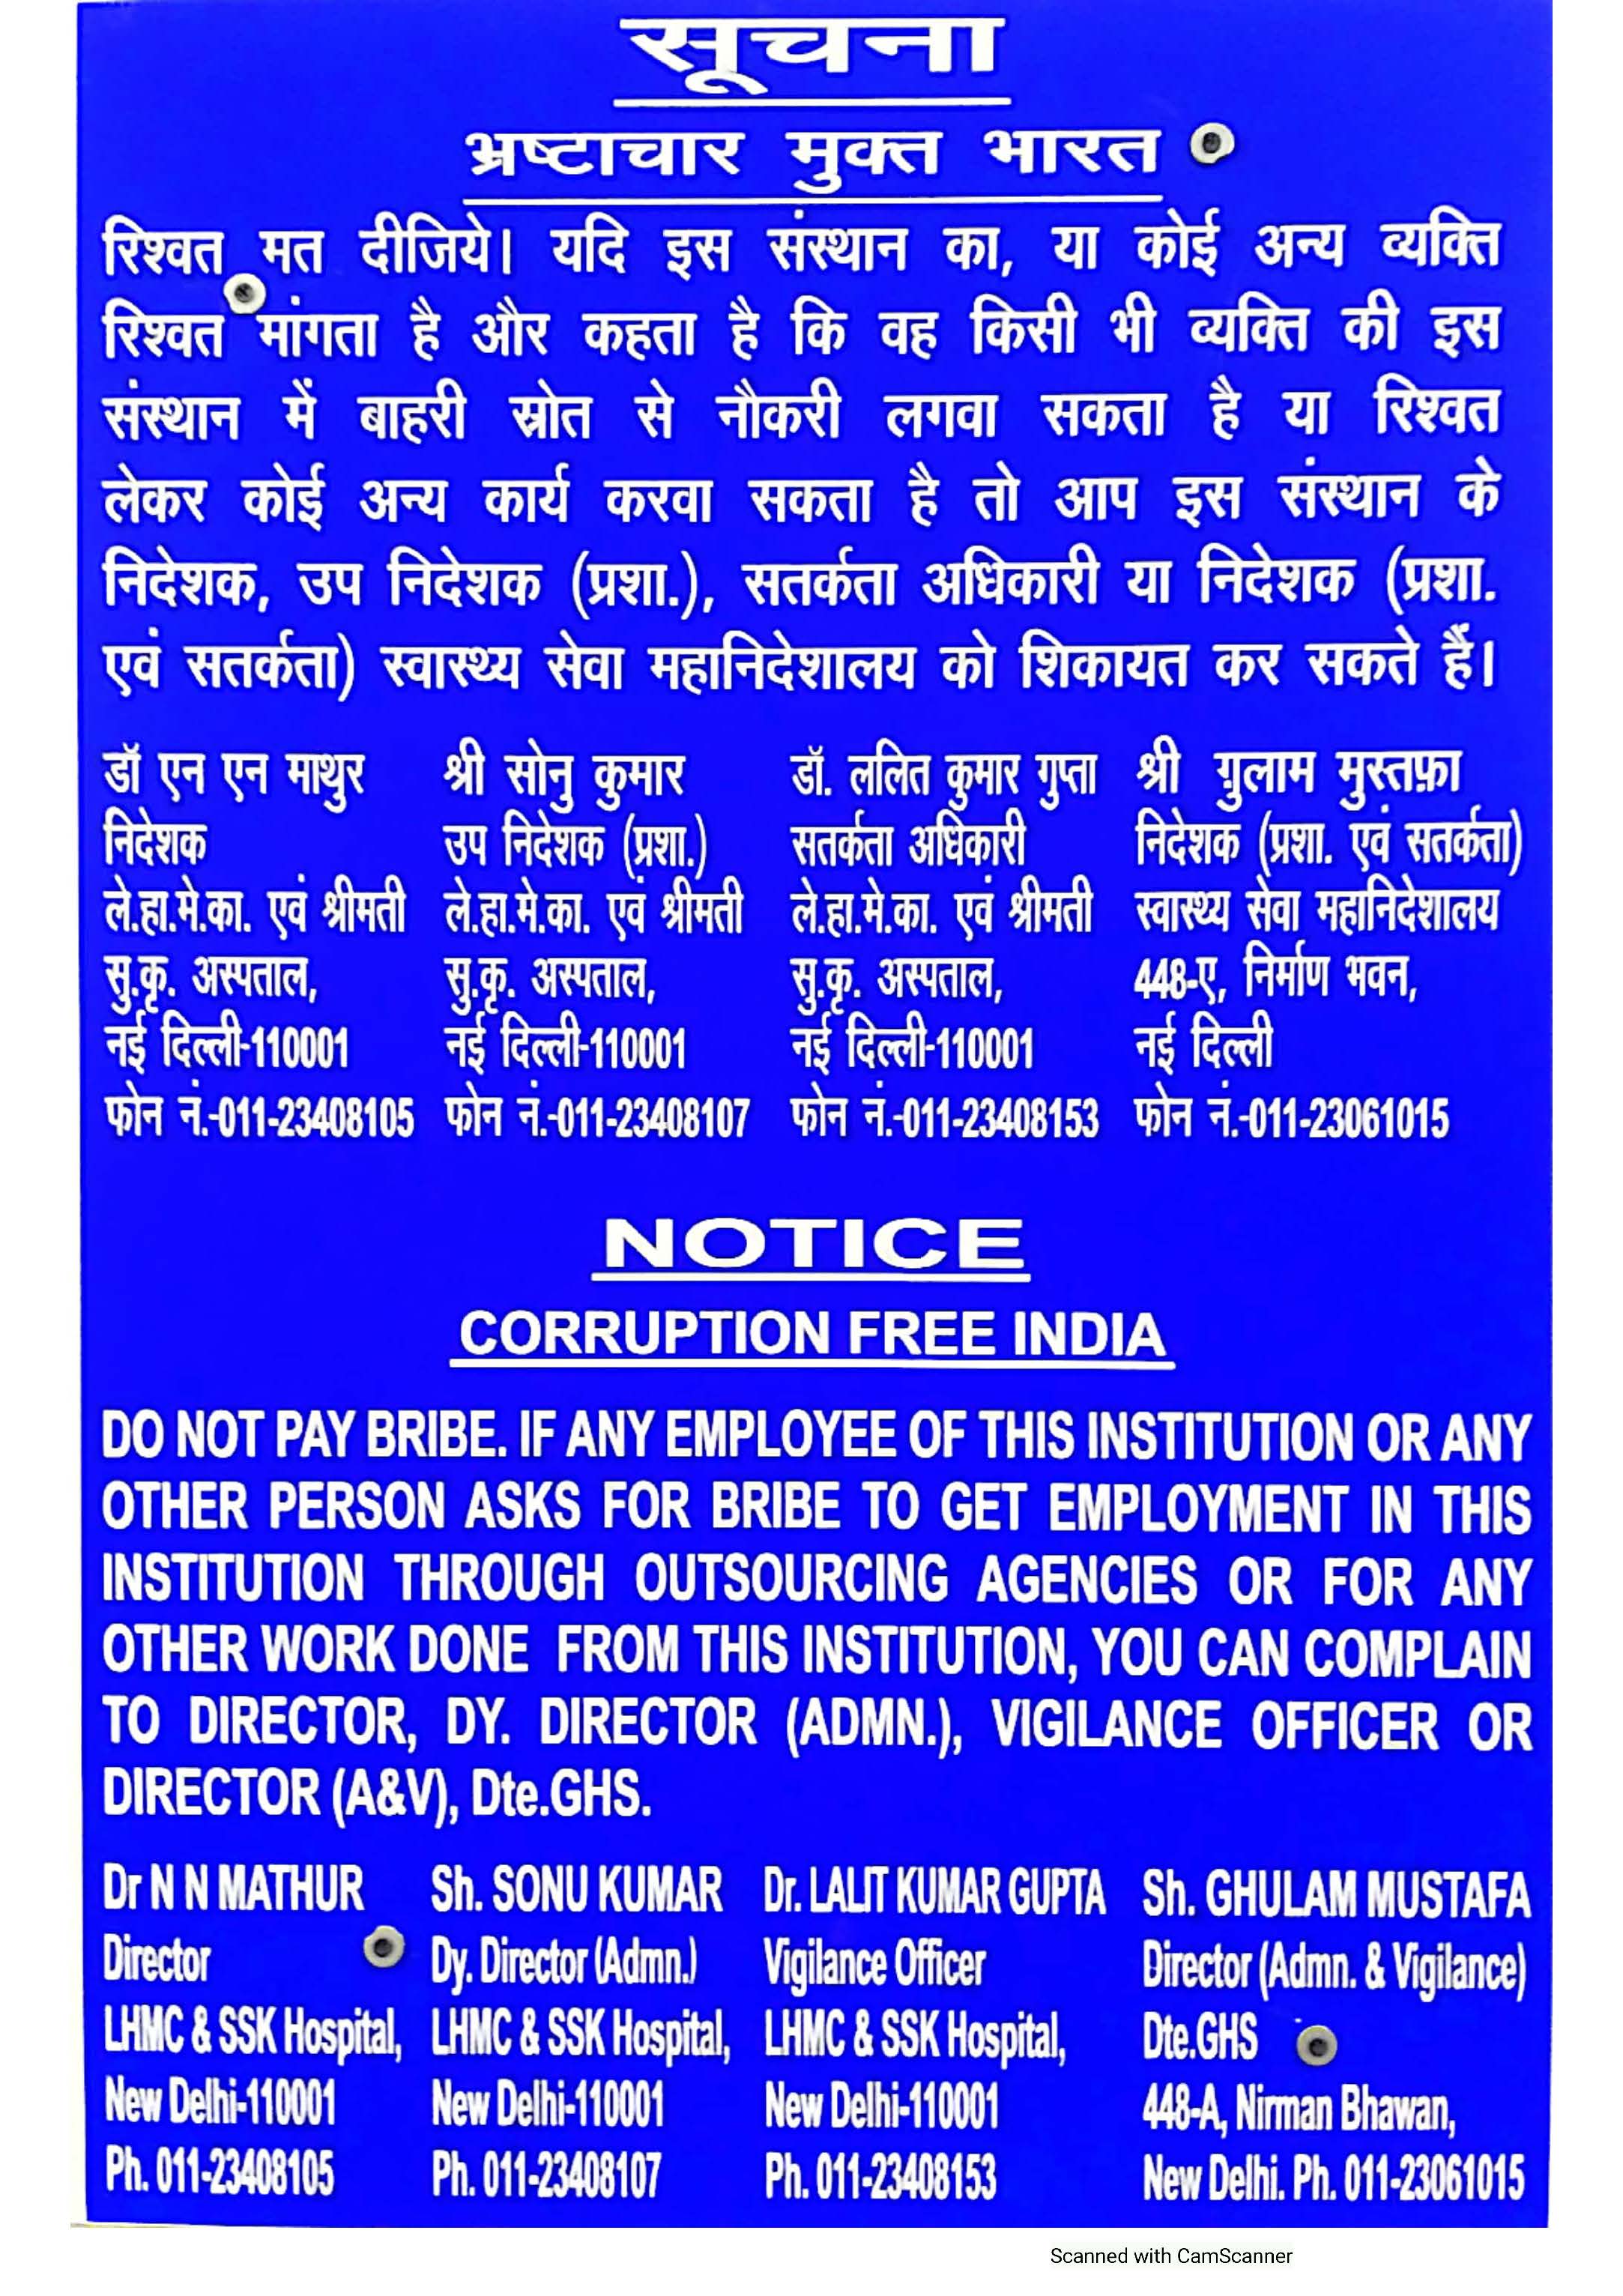 Notice Board "Corruption Free India"